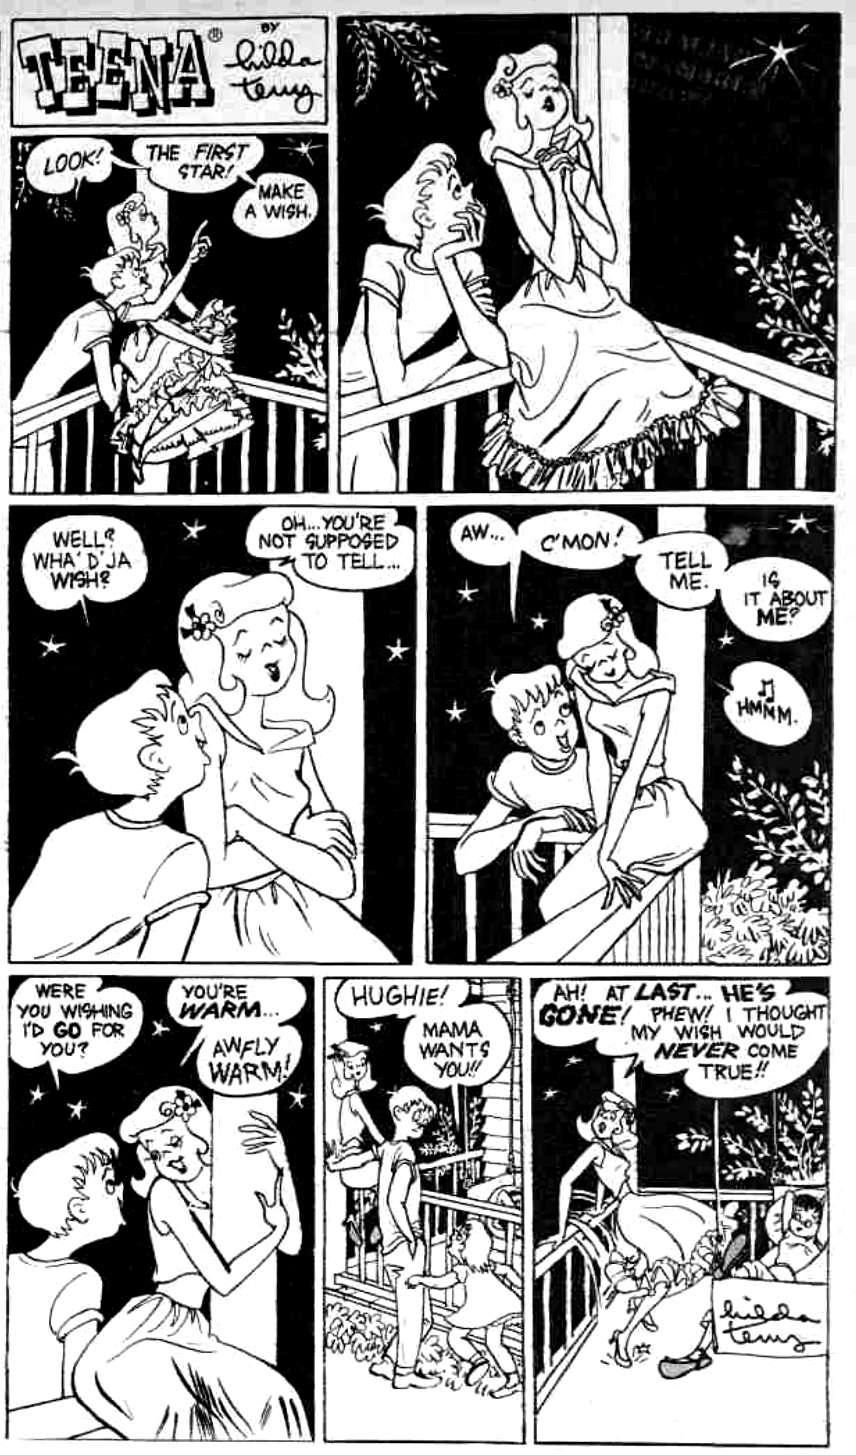 Comic Book Cover For Teena (1957)